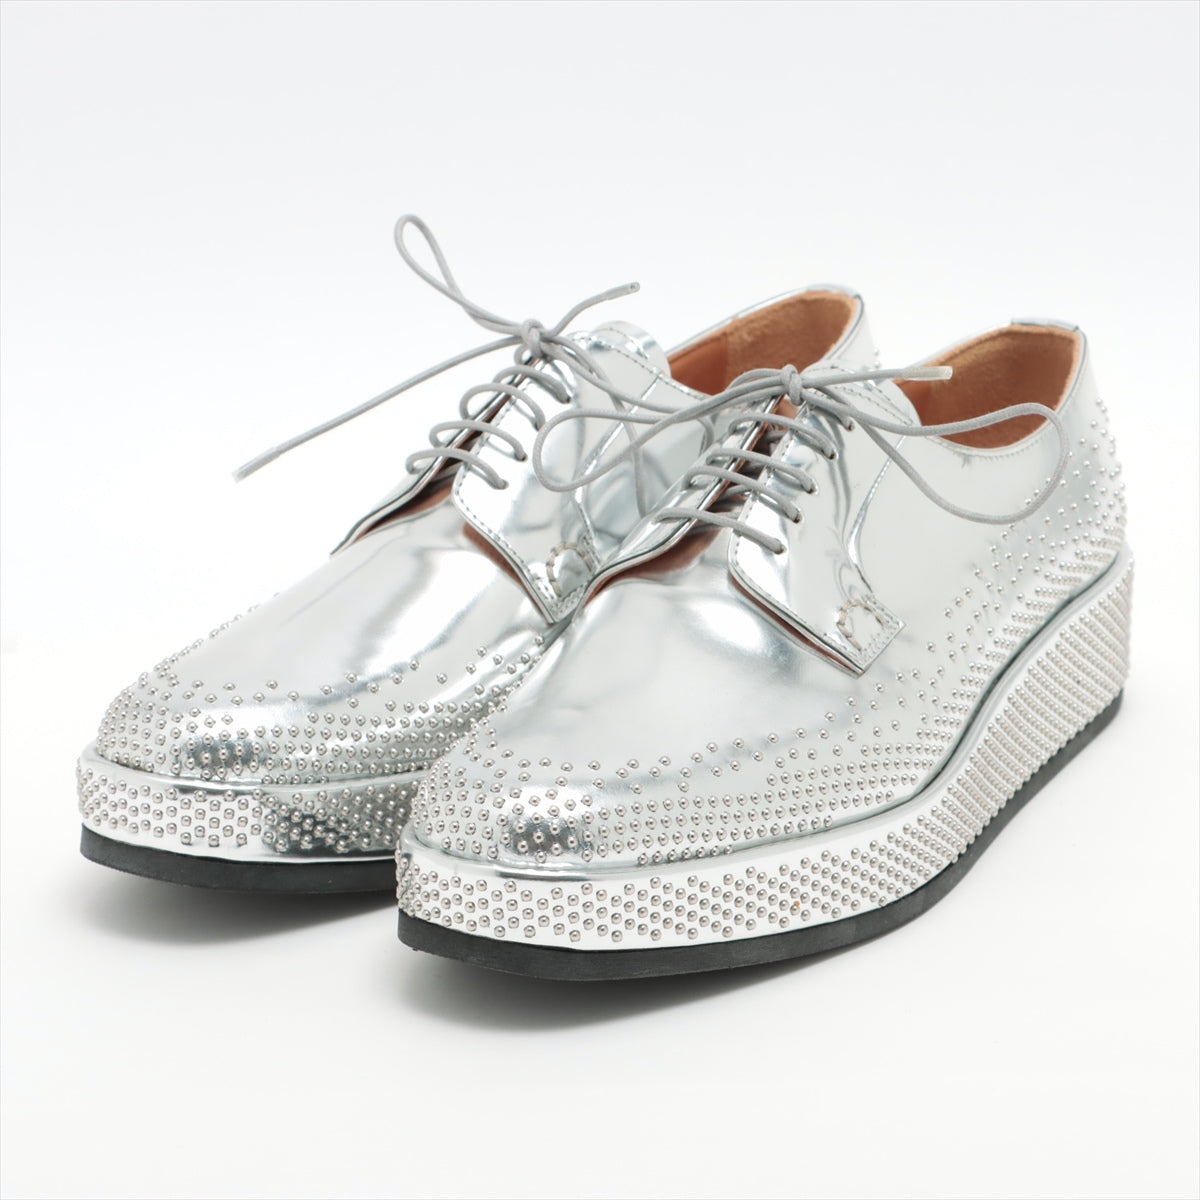 Church x Noir Keinininomiya 21AW Metallic Leather Leather shoes 38 1/2 Ladies' Silver DE0250 Studs